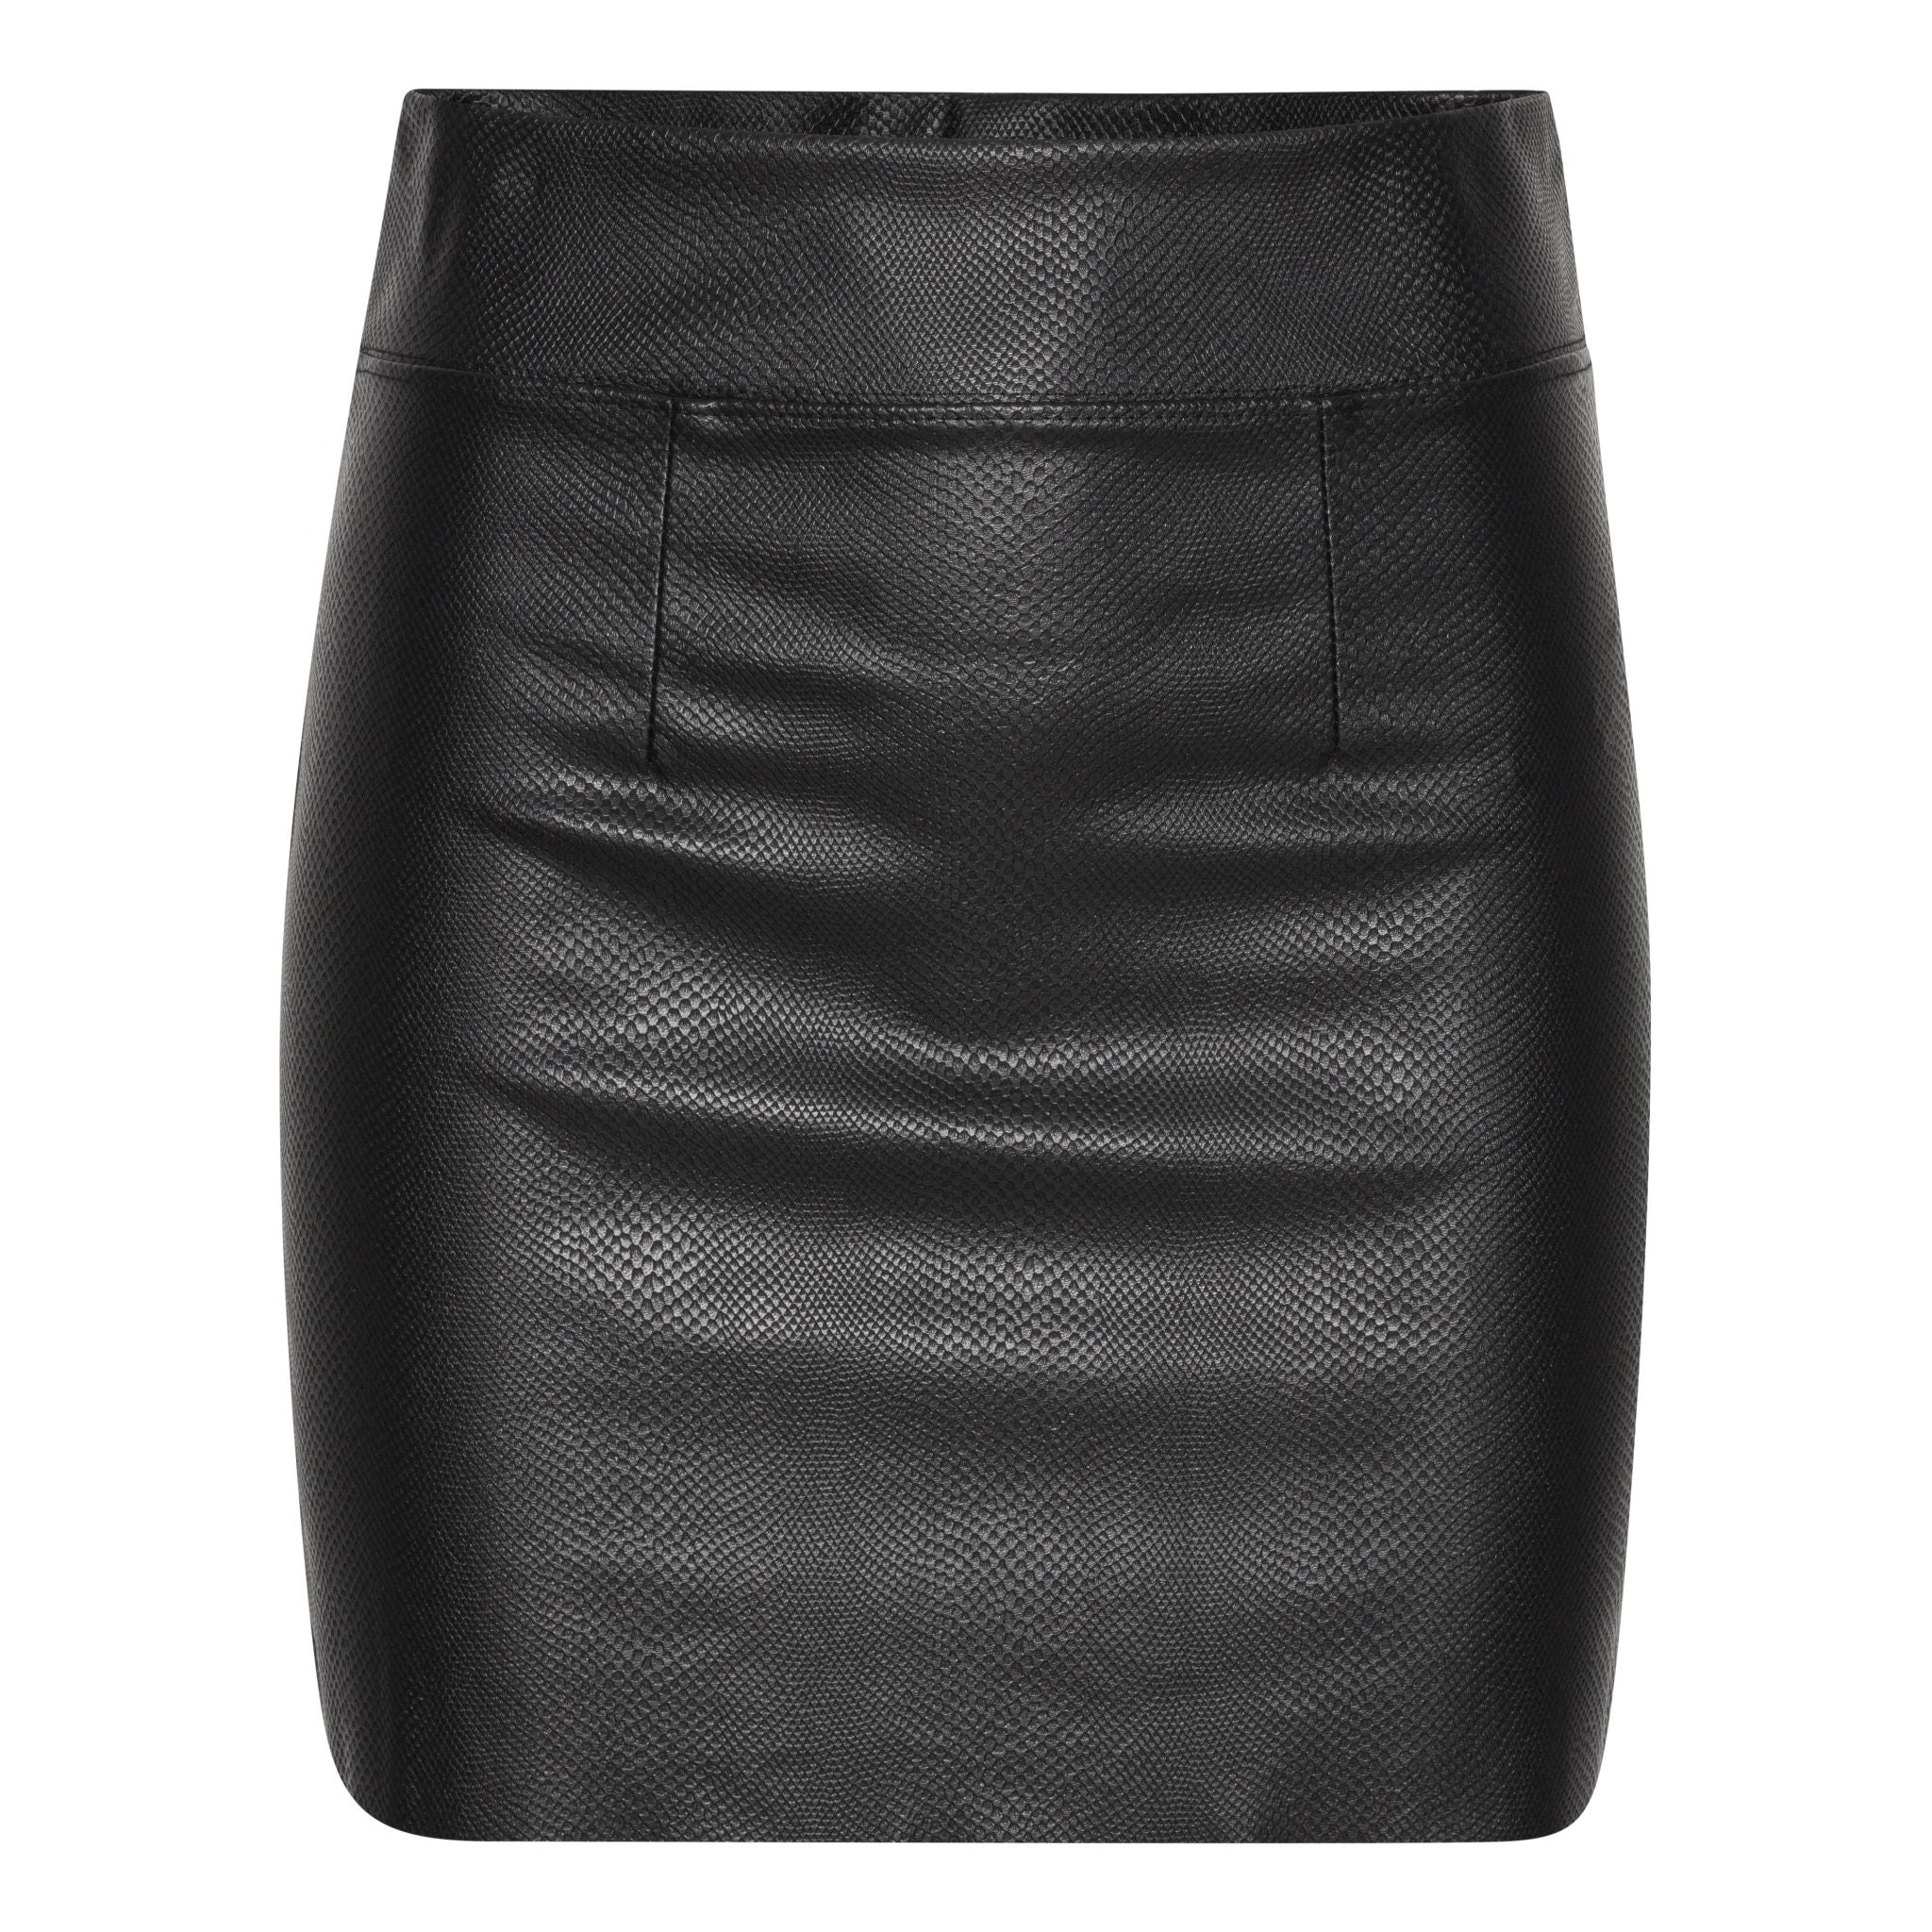 Black patterned leather skirt